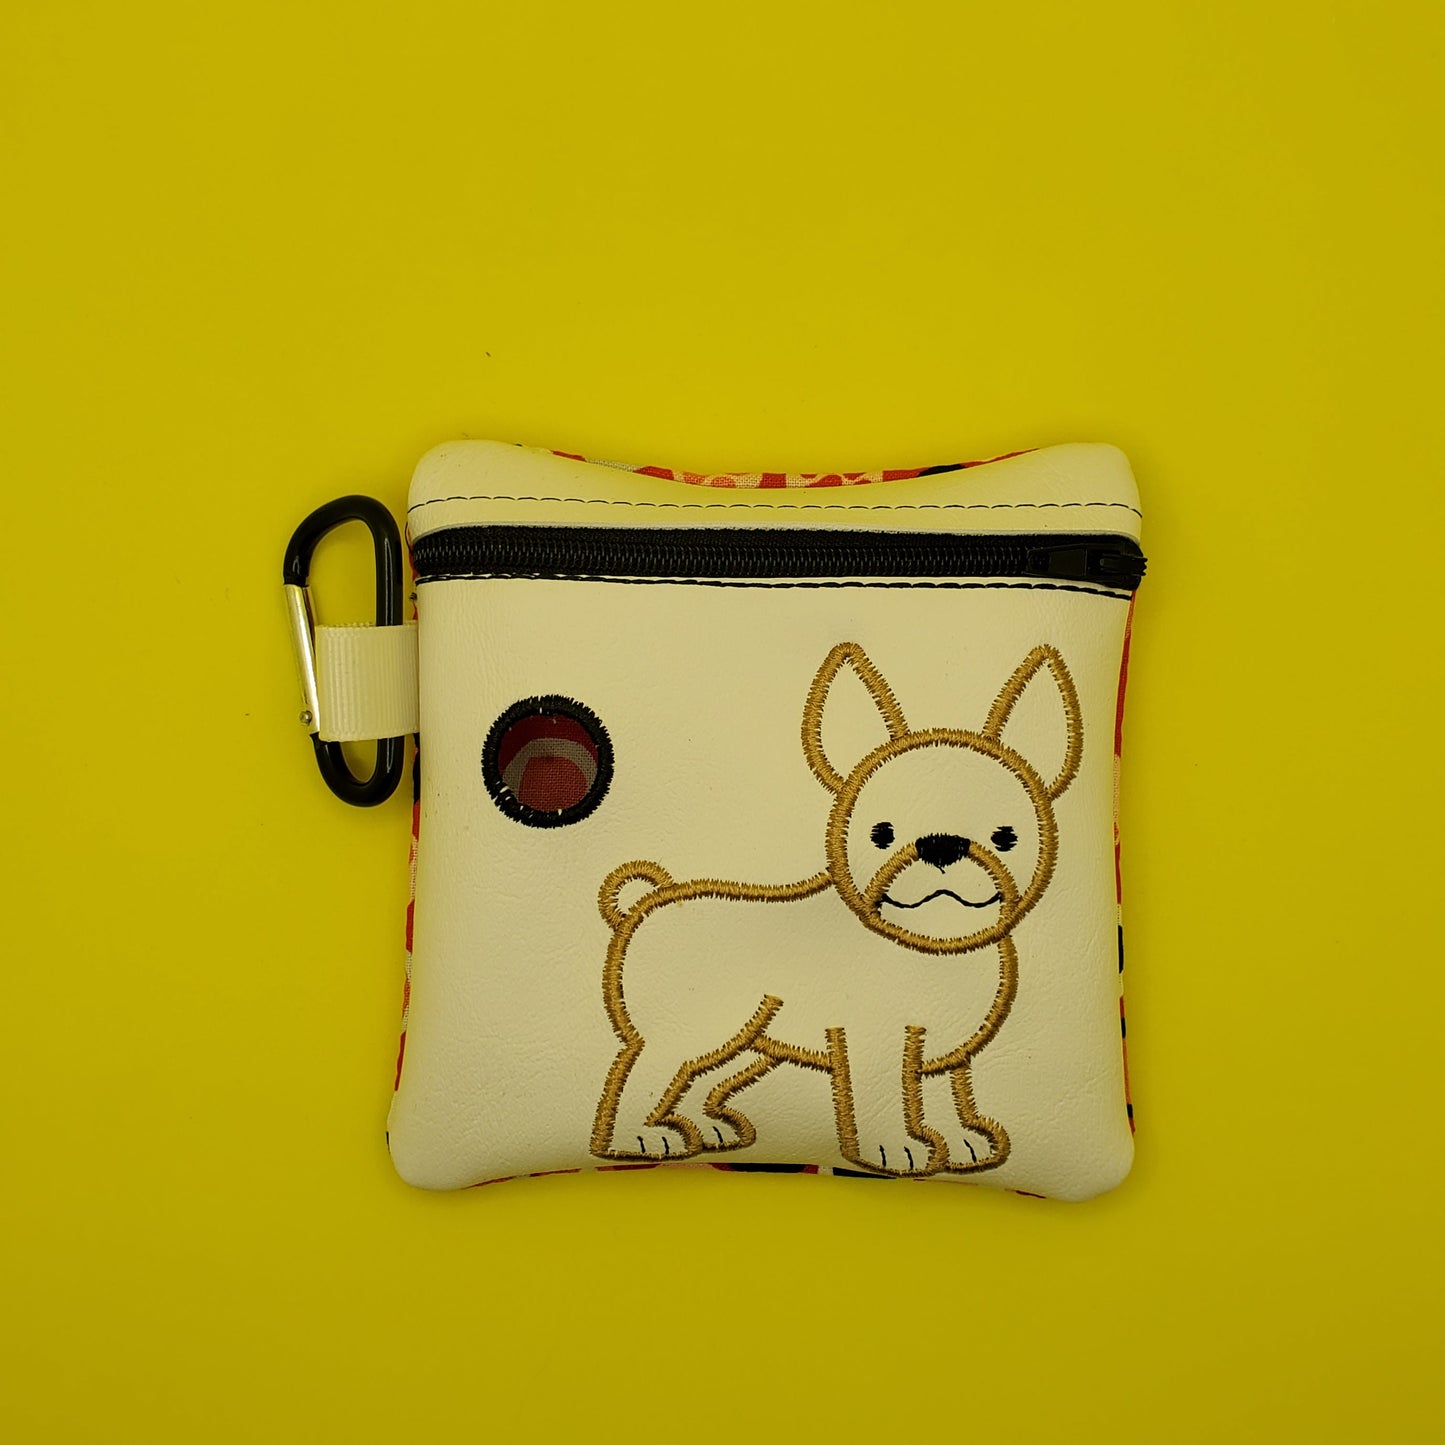 French Bull Dog / Frenchie - Pet Poo/waste bag holder